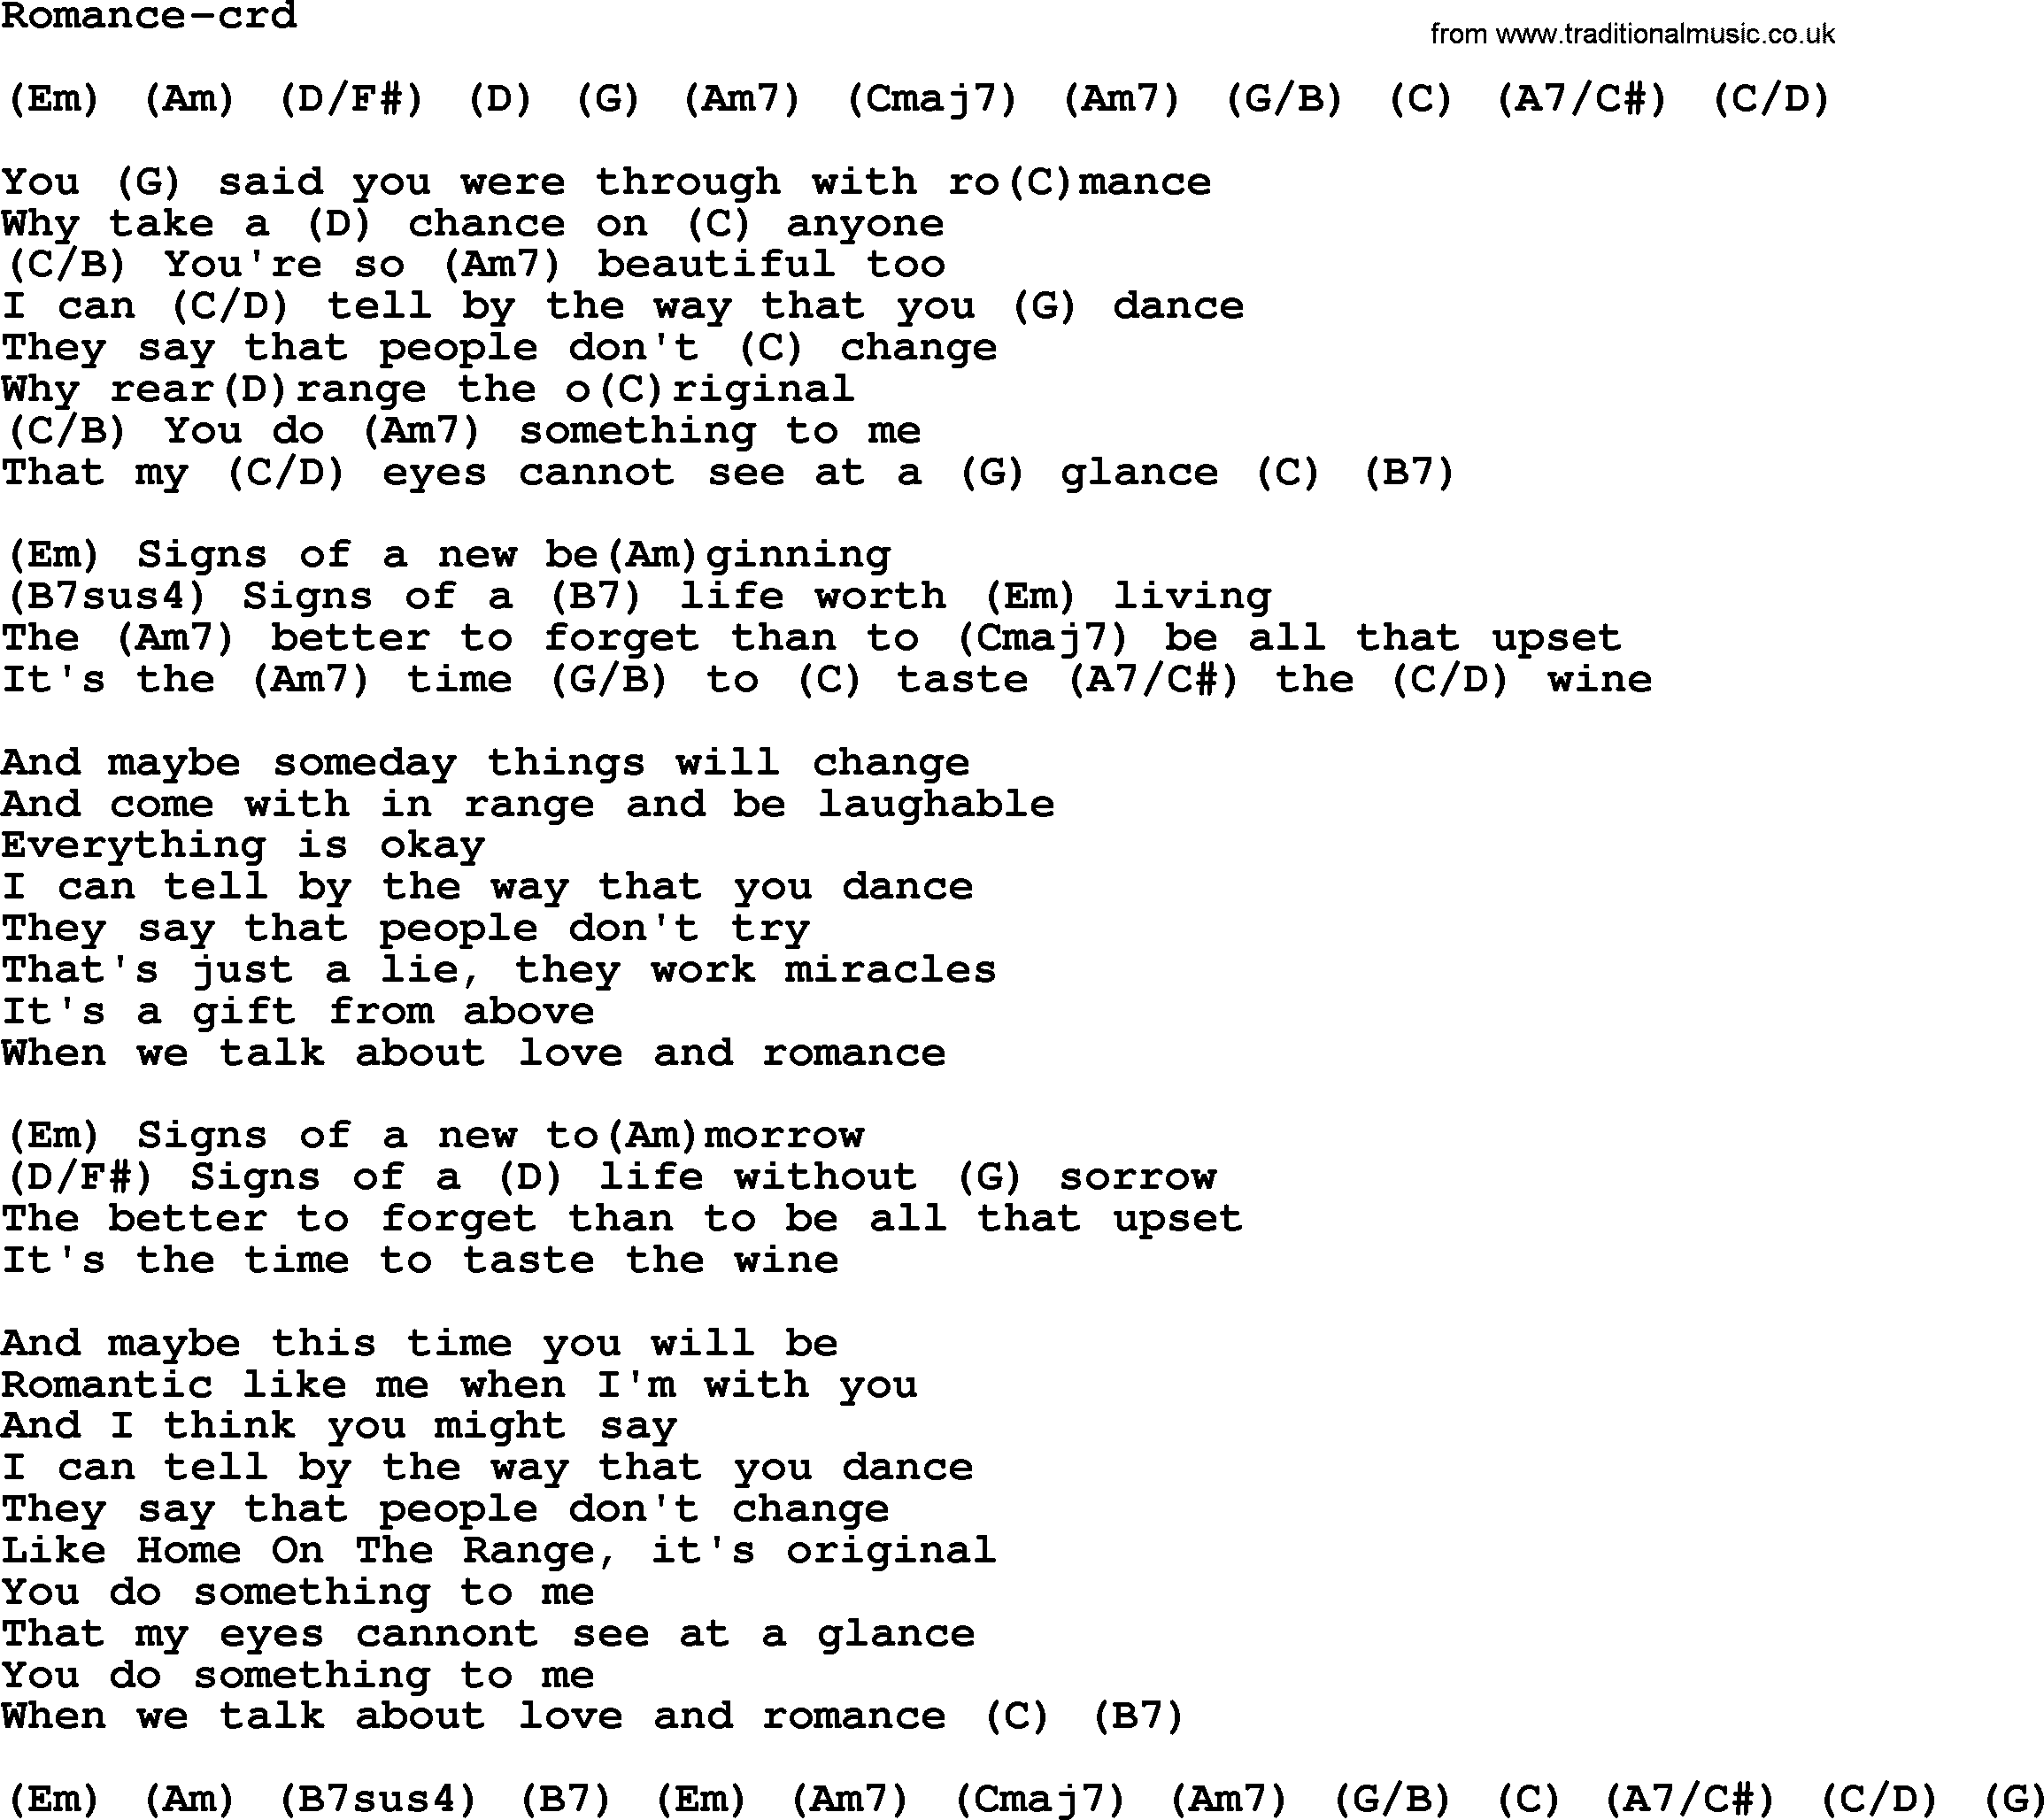 Gordon Lightfoot song Romance, lyrics and chords